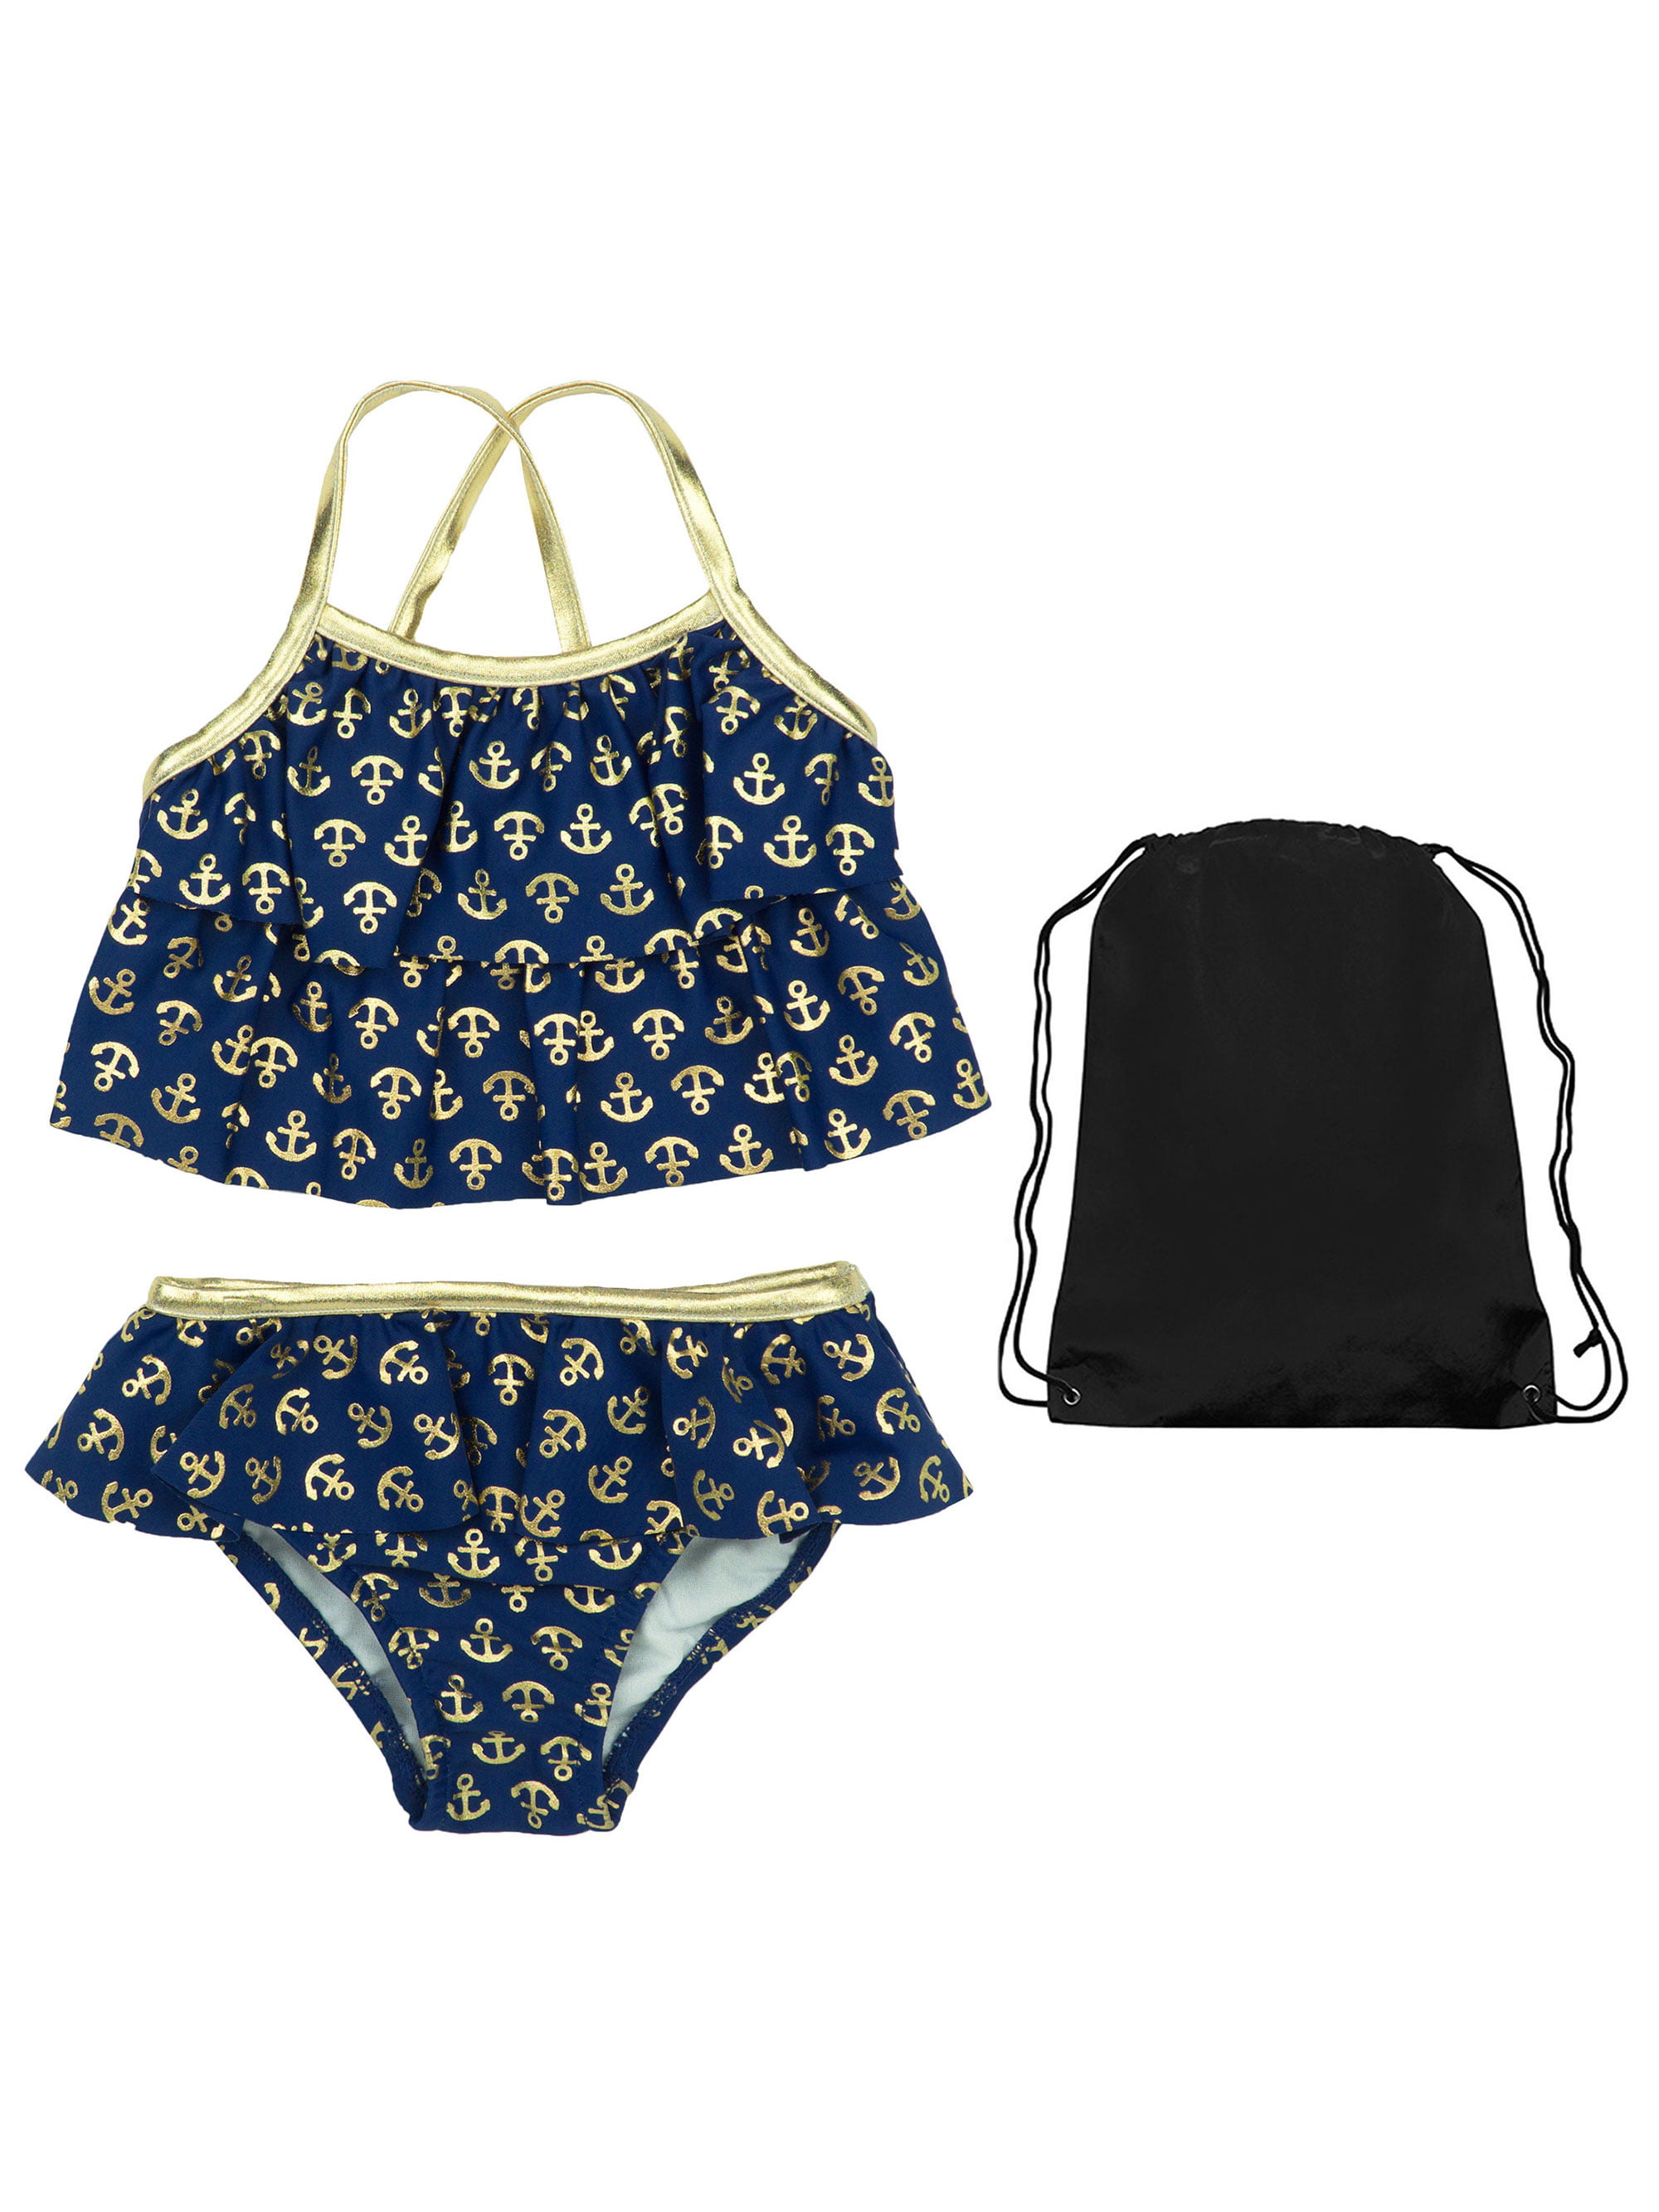 KIKO & MAX Girls Baby Ruffle Top Two Piece Bikini Swimsuit Bathing Suit